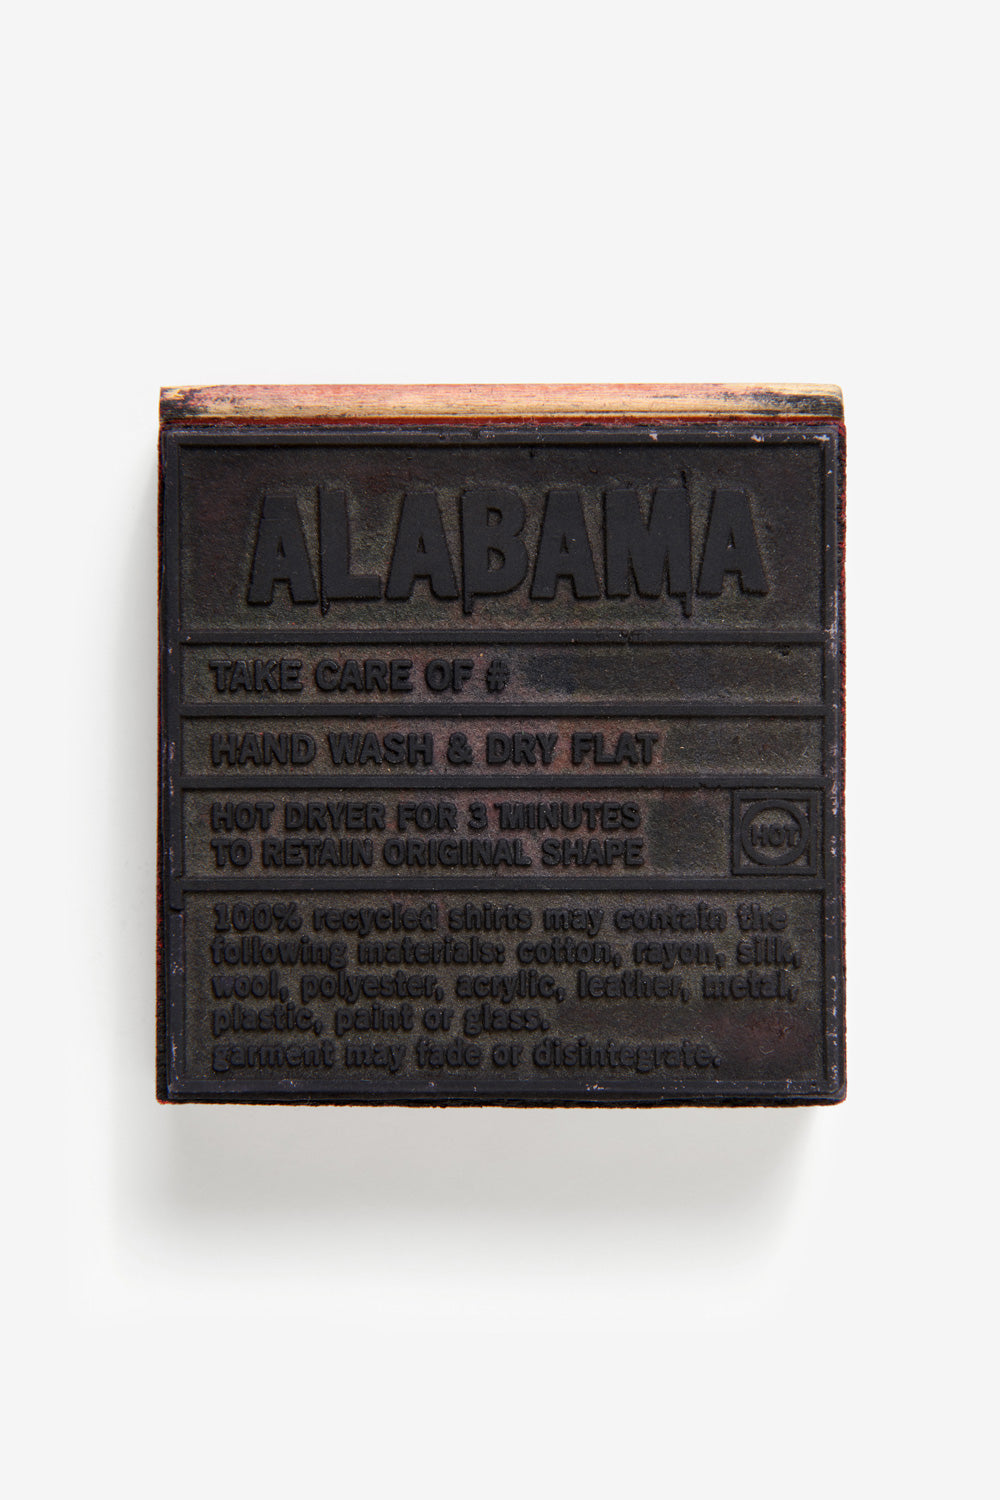 Alabama Collection, 2000